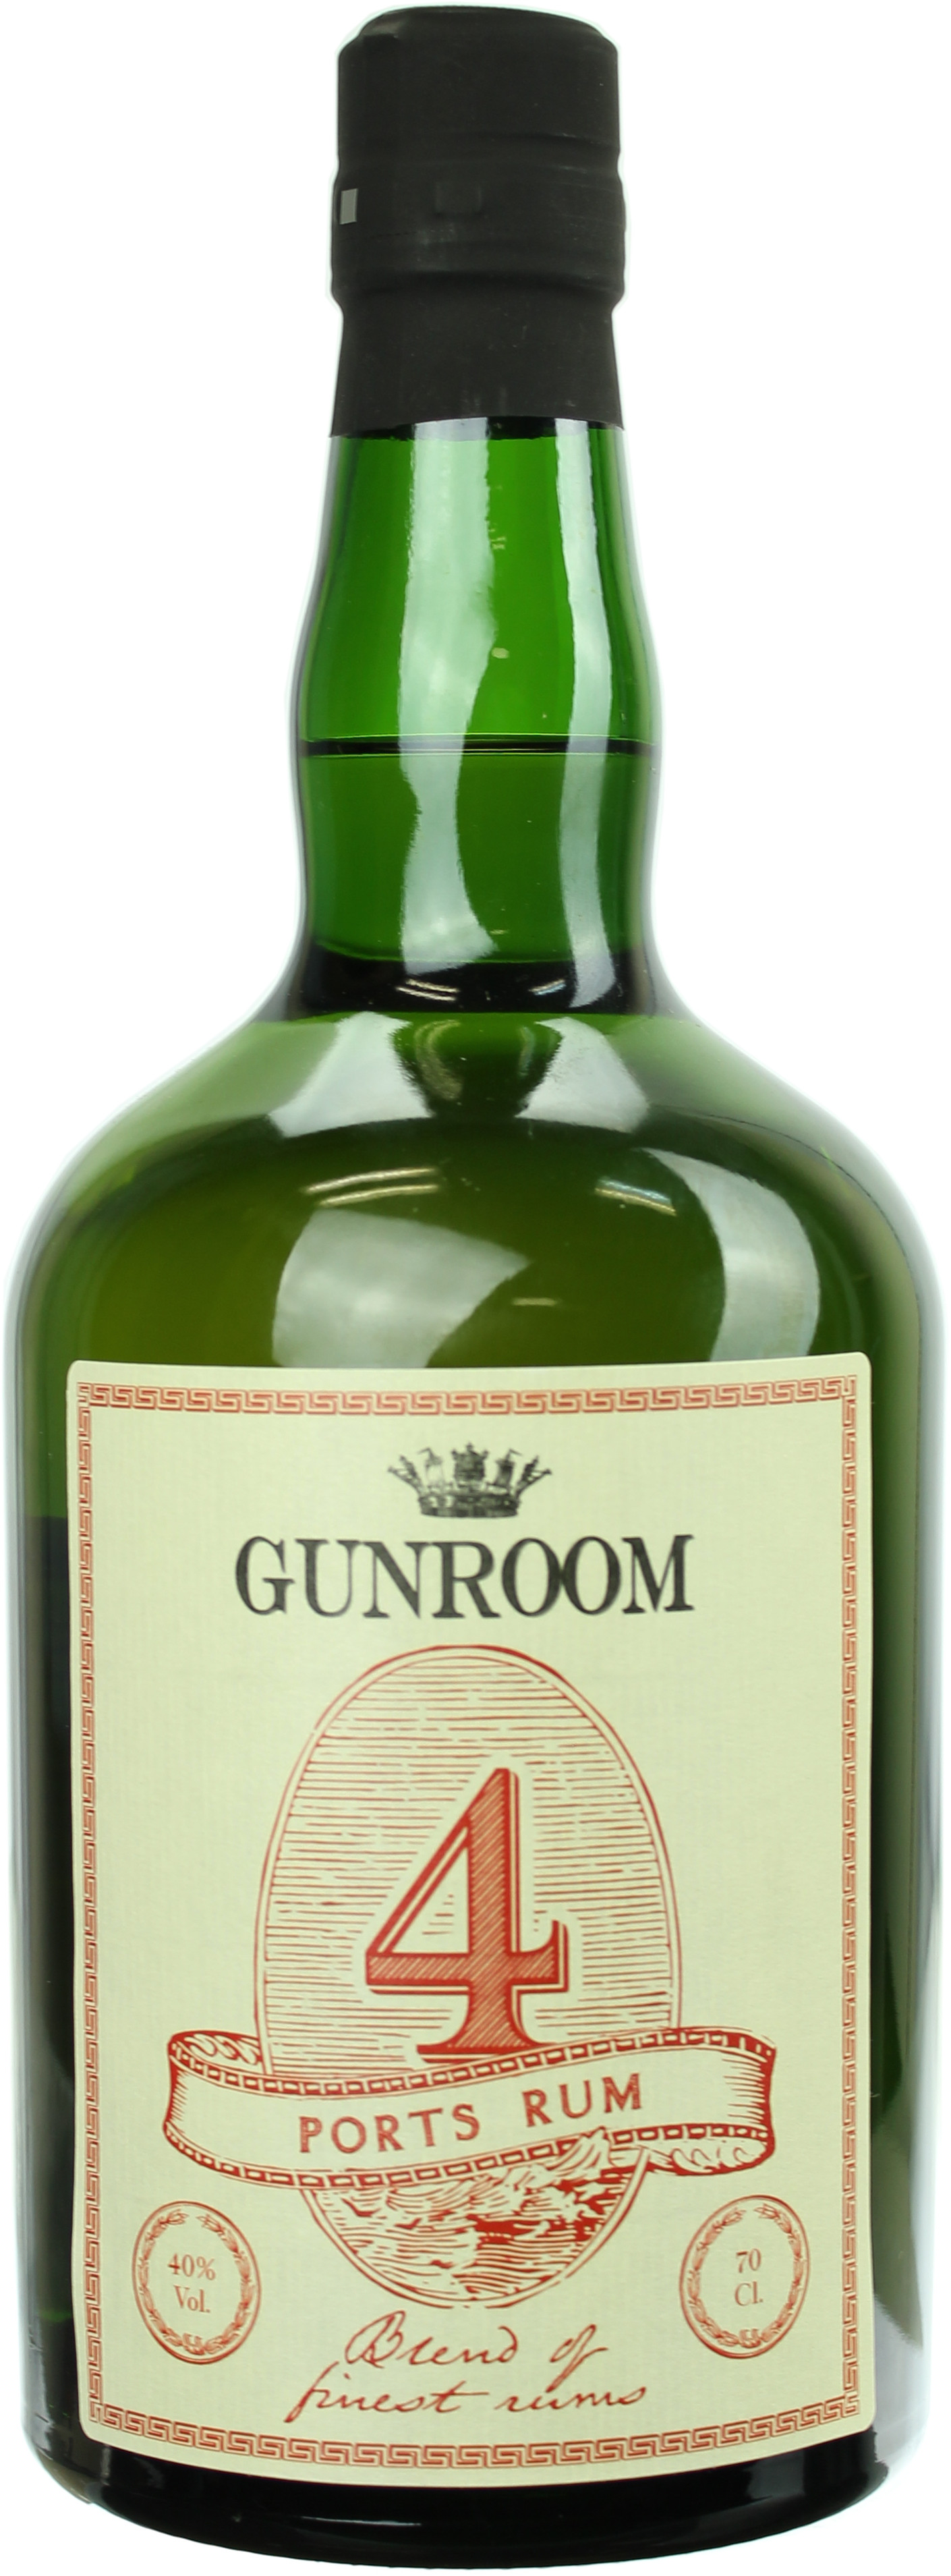 Gunroom 4 Ports Rum 40.0% 0,7l